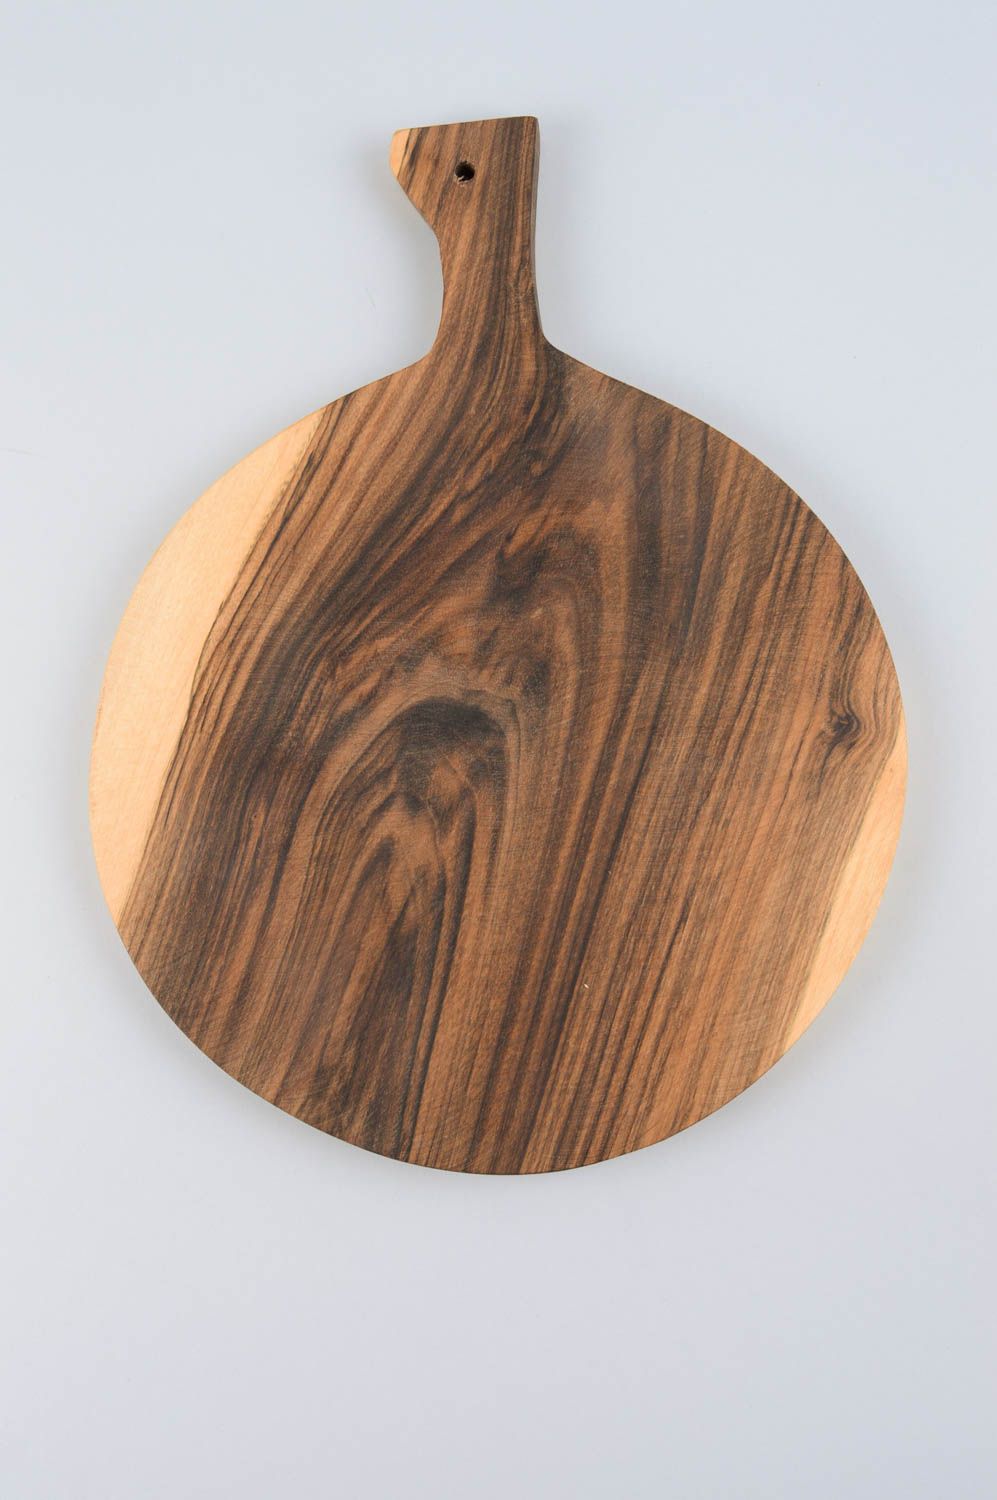 Handmade cutting board wooden chopping board kitchen decor wooden utensils photo 2